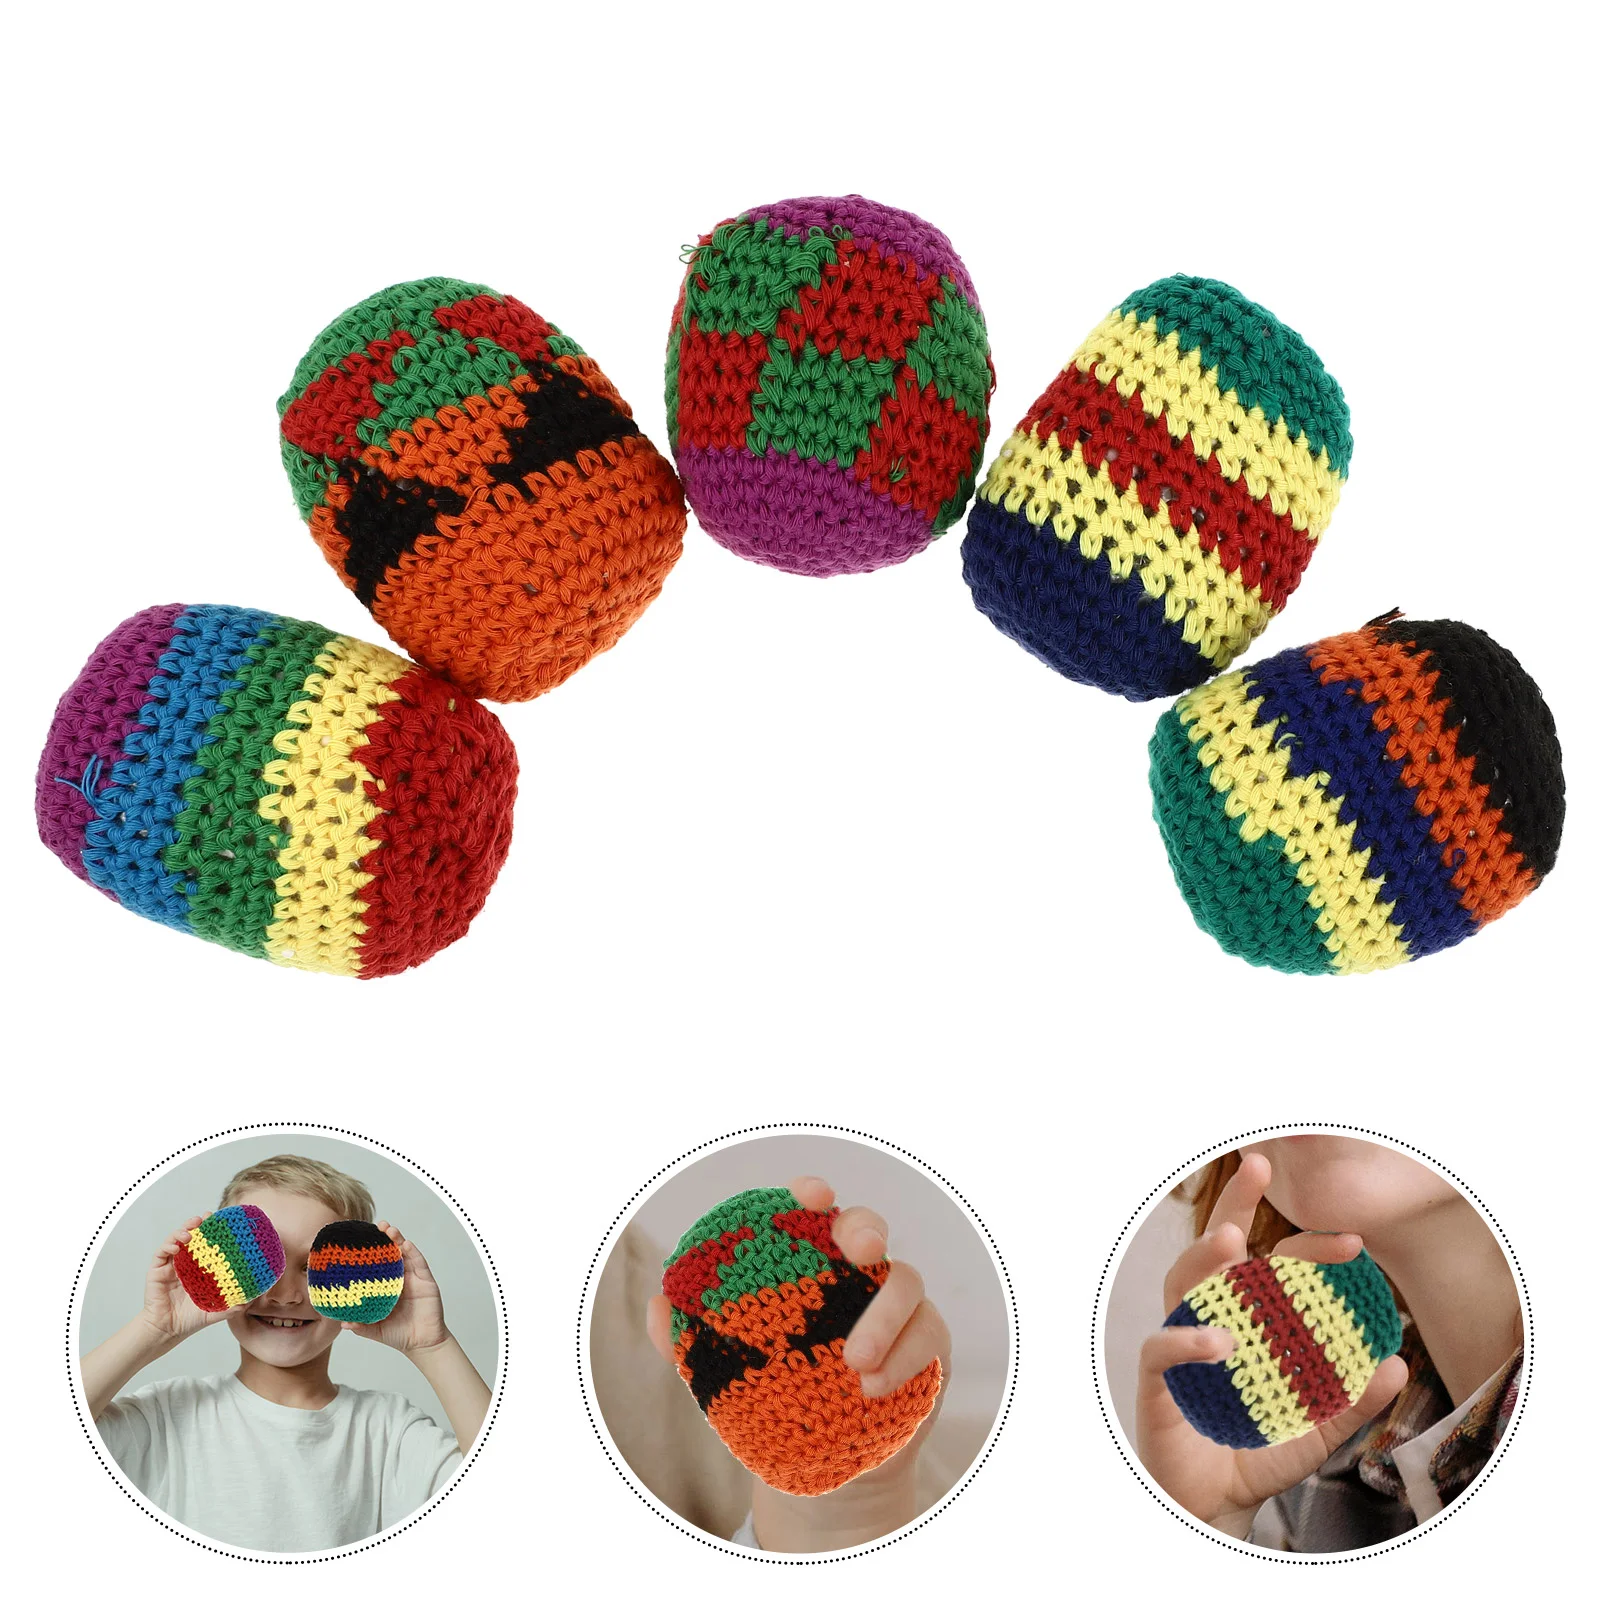 

5 Pcs Outdoor Bean Bags Wool Sandbag Foot Indoor Game Kick Balls Throwing Children Yarn Multicolored Crocheted Knitted Sacks